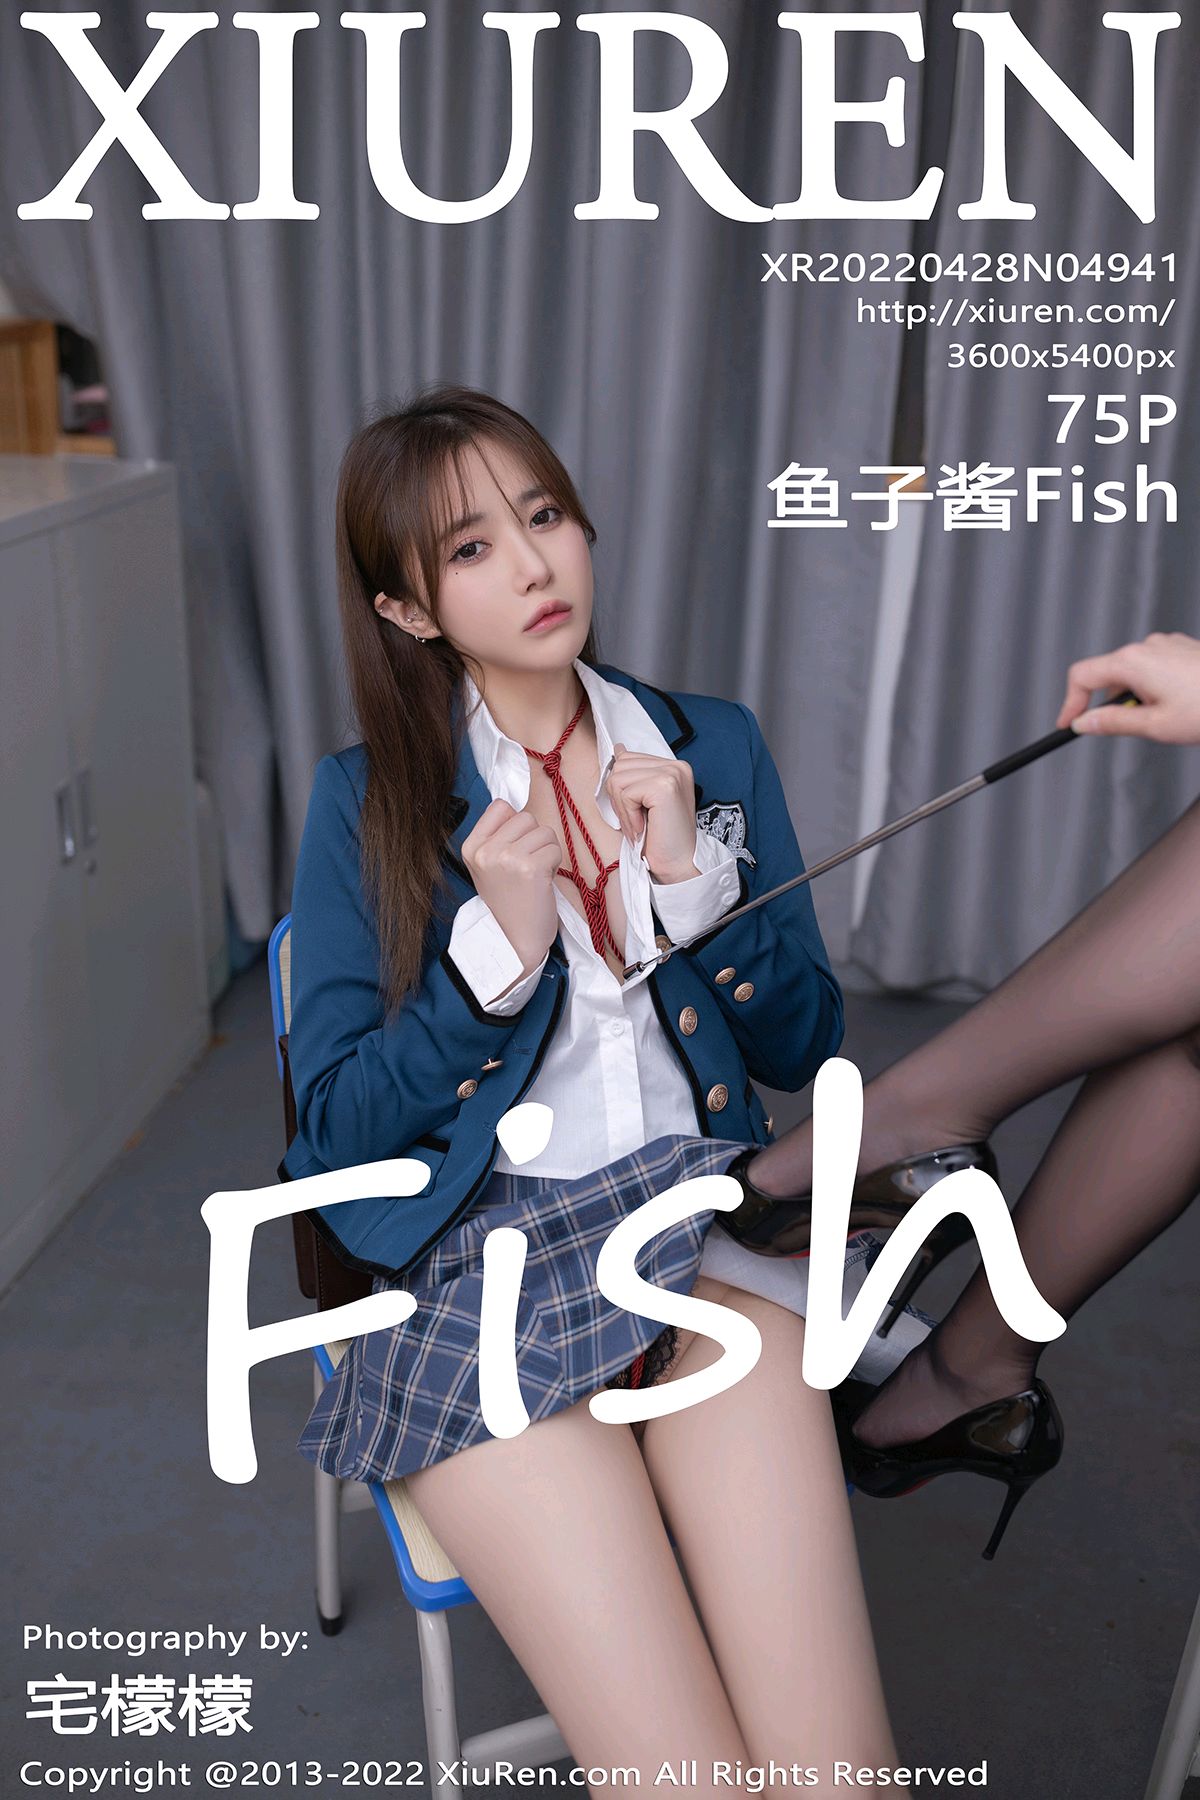 [XiuRen秀人网] 2022.04.28 No.4941 鱼子酱Fish [75P652MB]